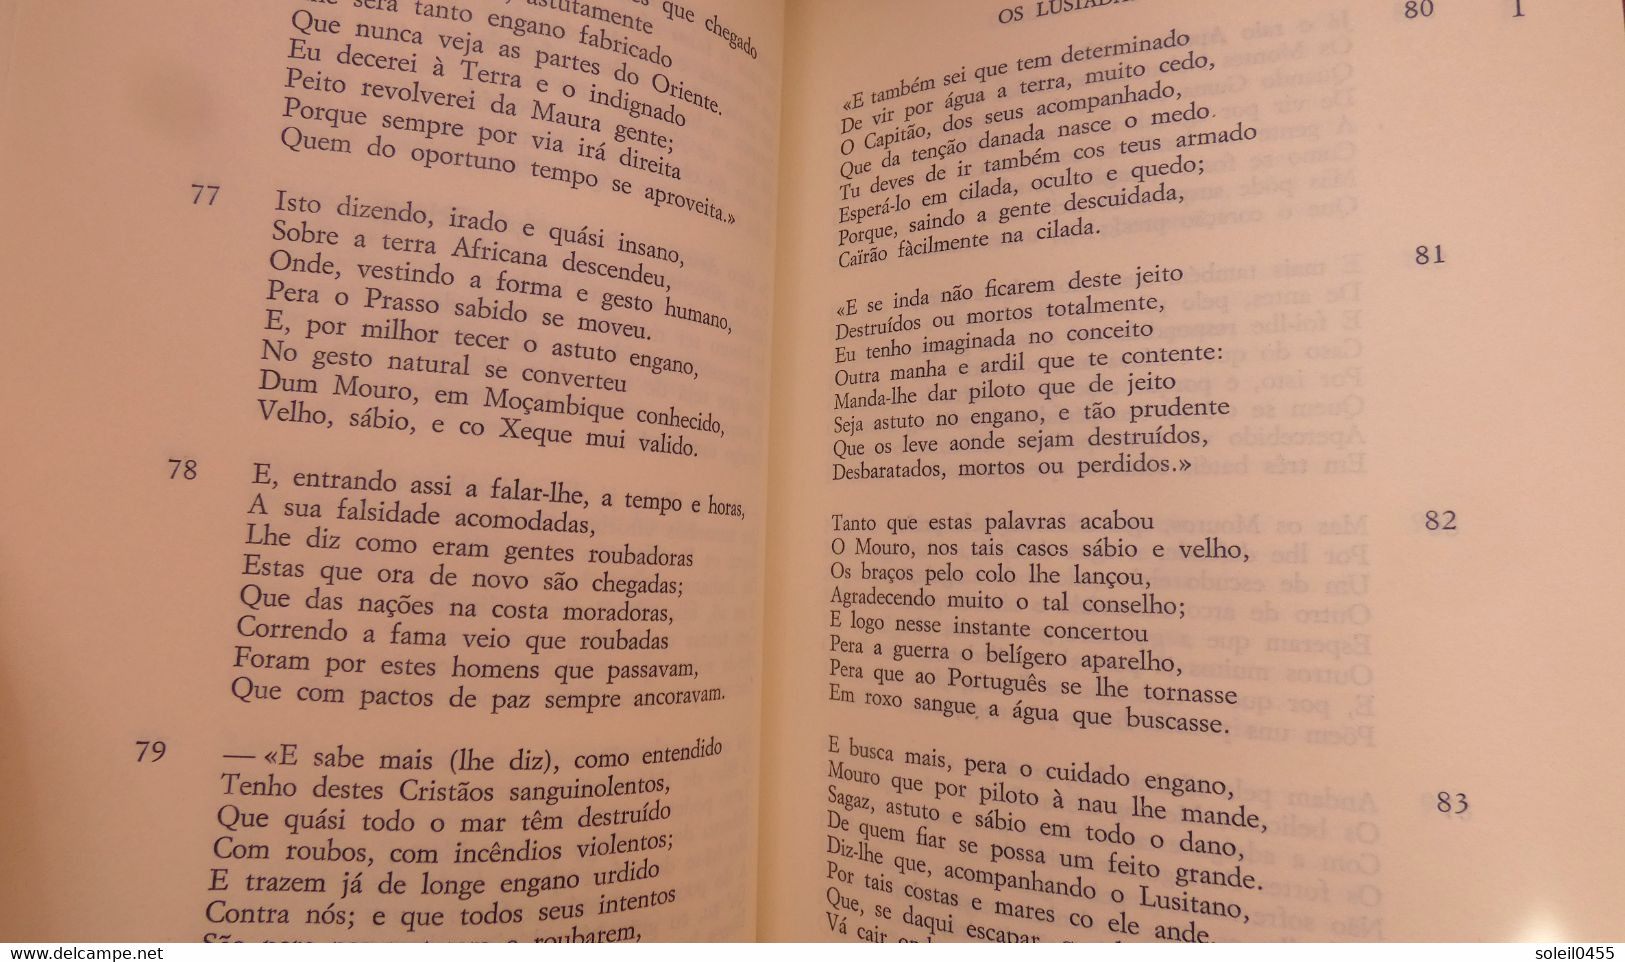 Os Lusiadas De Luis De Camoes - 1972 - Poetry